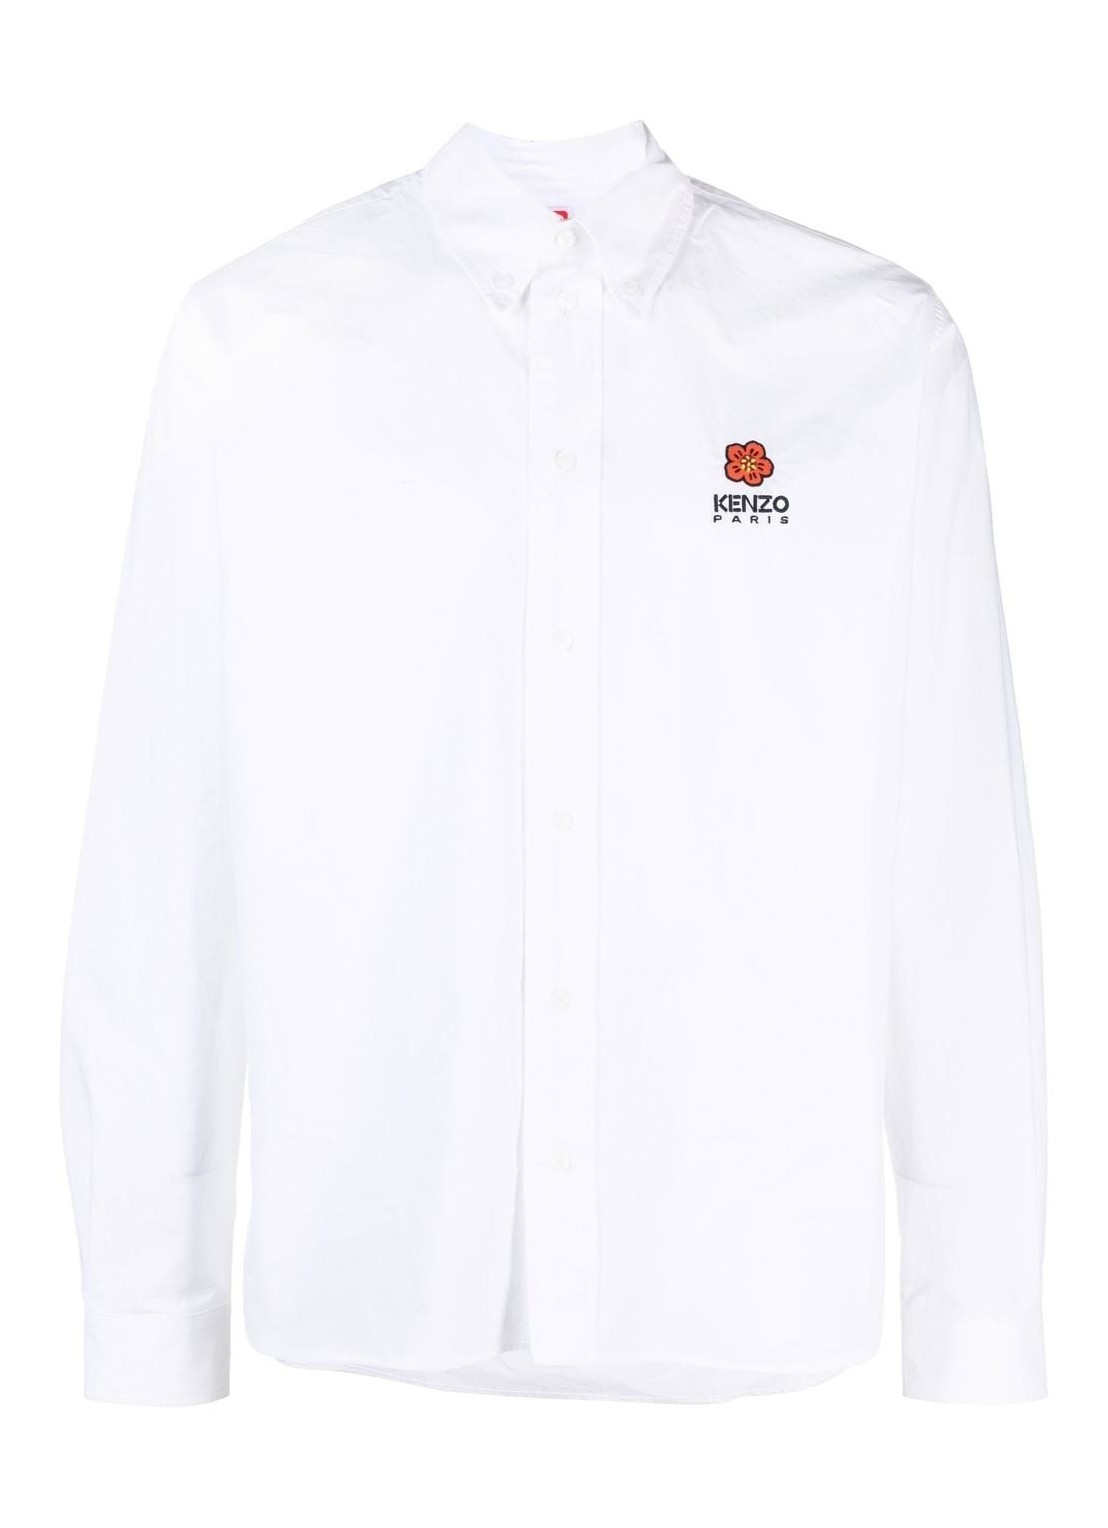 Camiseria kenzo shirt man boke flower crest casual shirt fd55ch4109lh 01 talla blanco
 